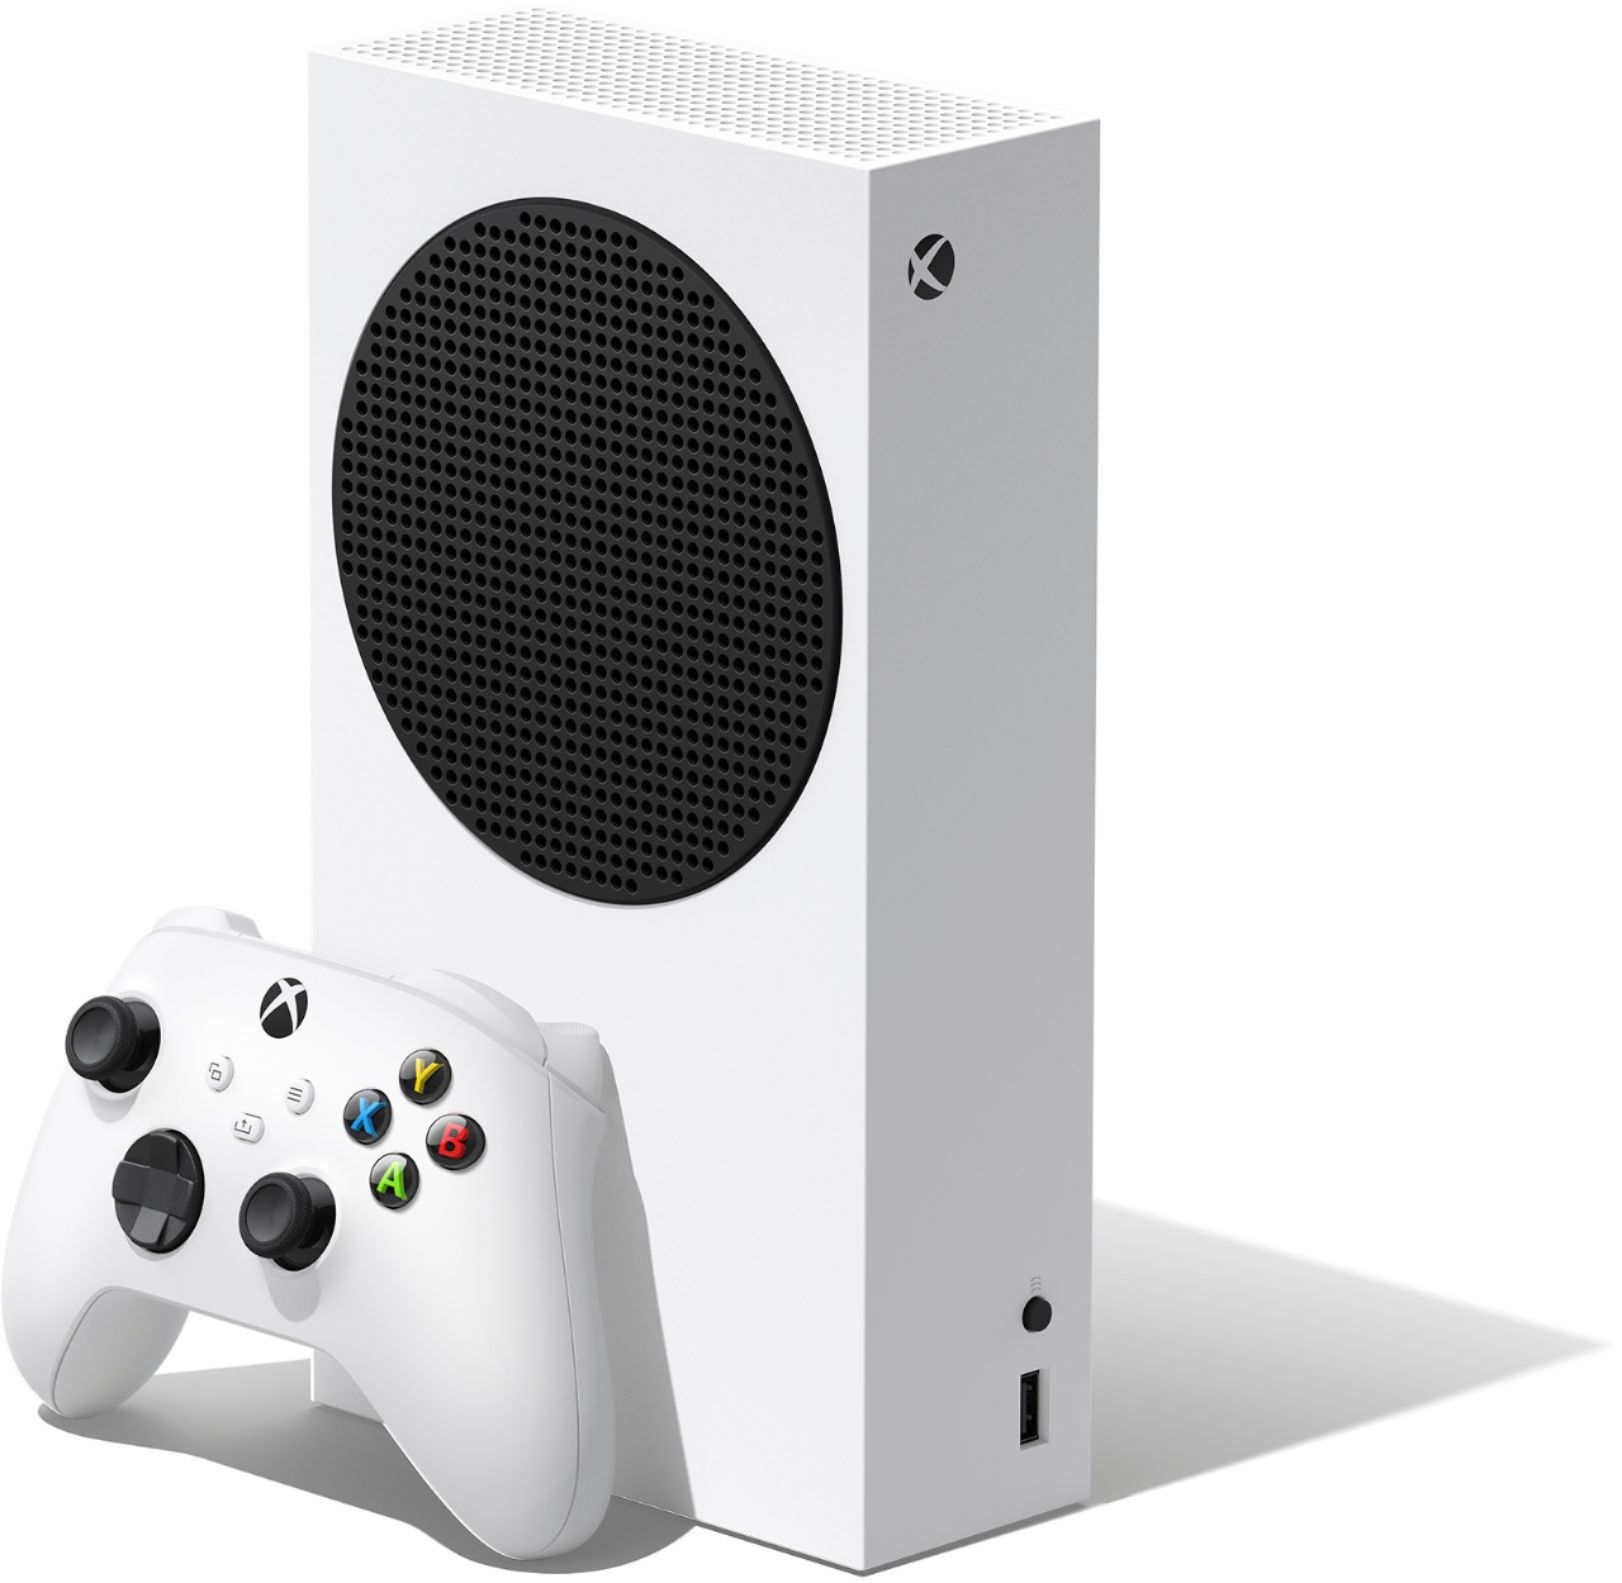 Microsoft Xbox Series S -VS- Xbox One S - Loading times - FORTNITE